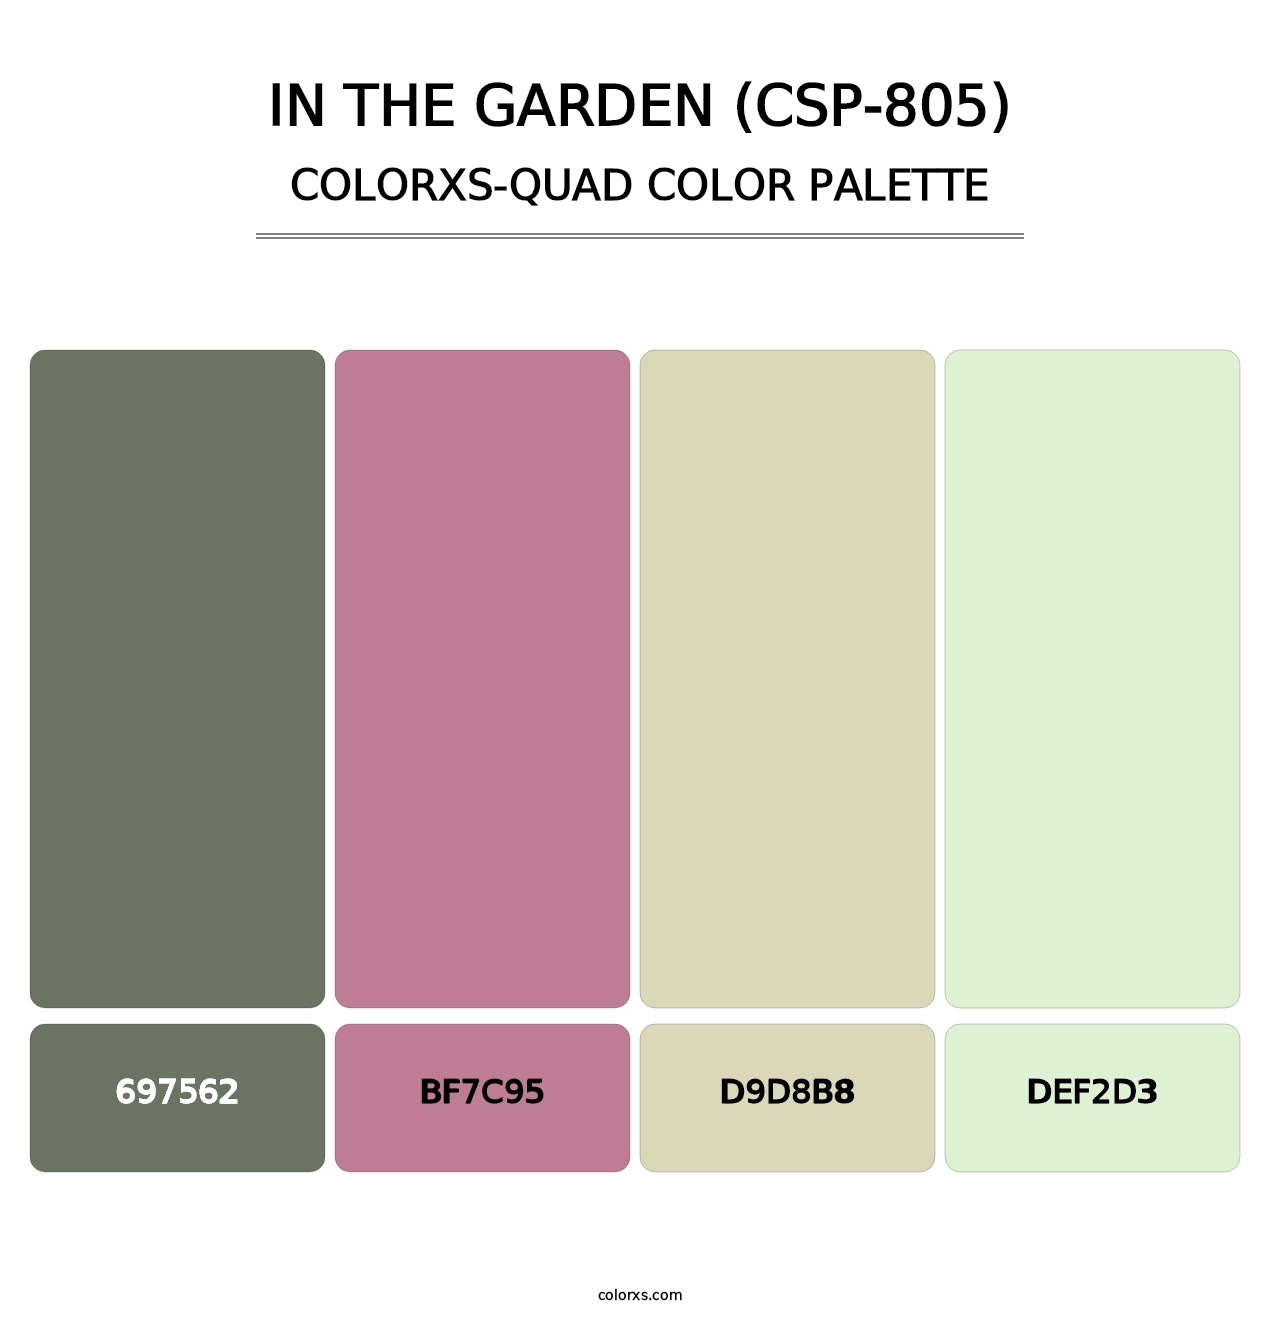 In the Garden (CSP-805) - Colorxs Quad Palette